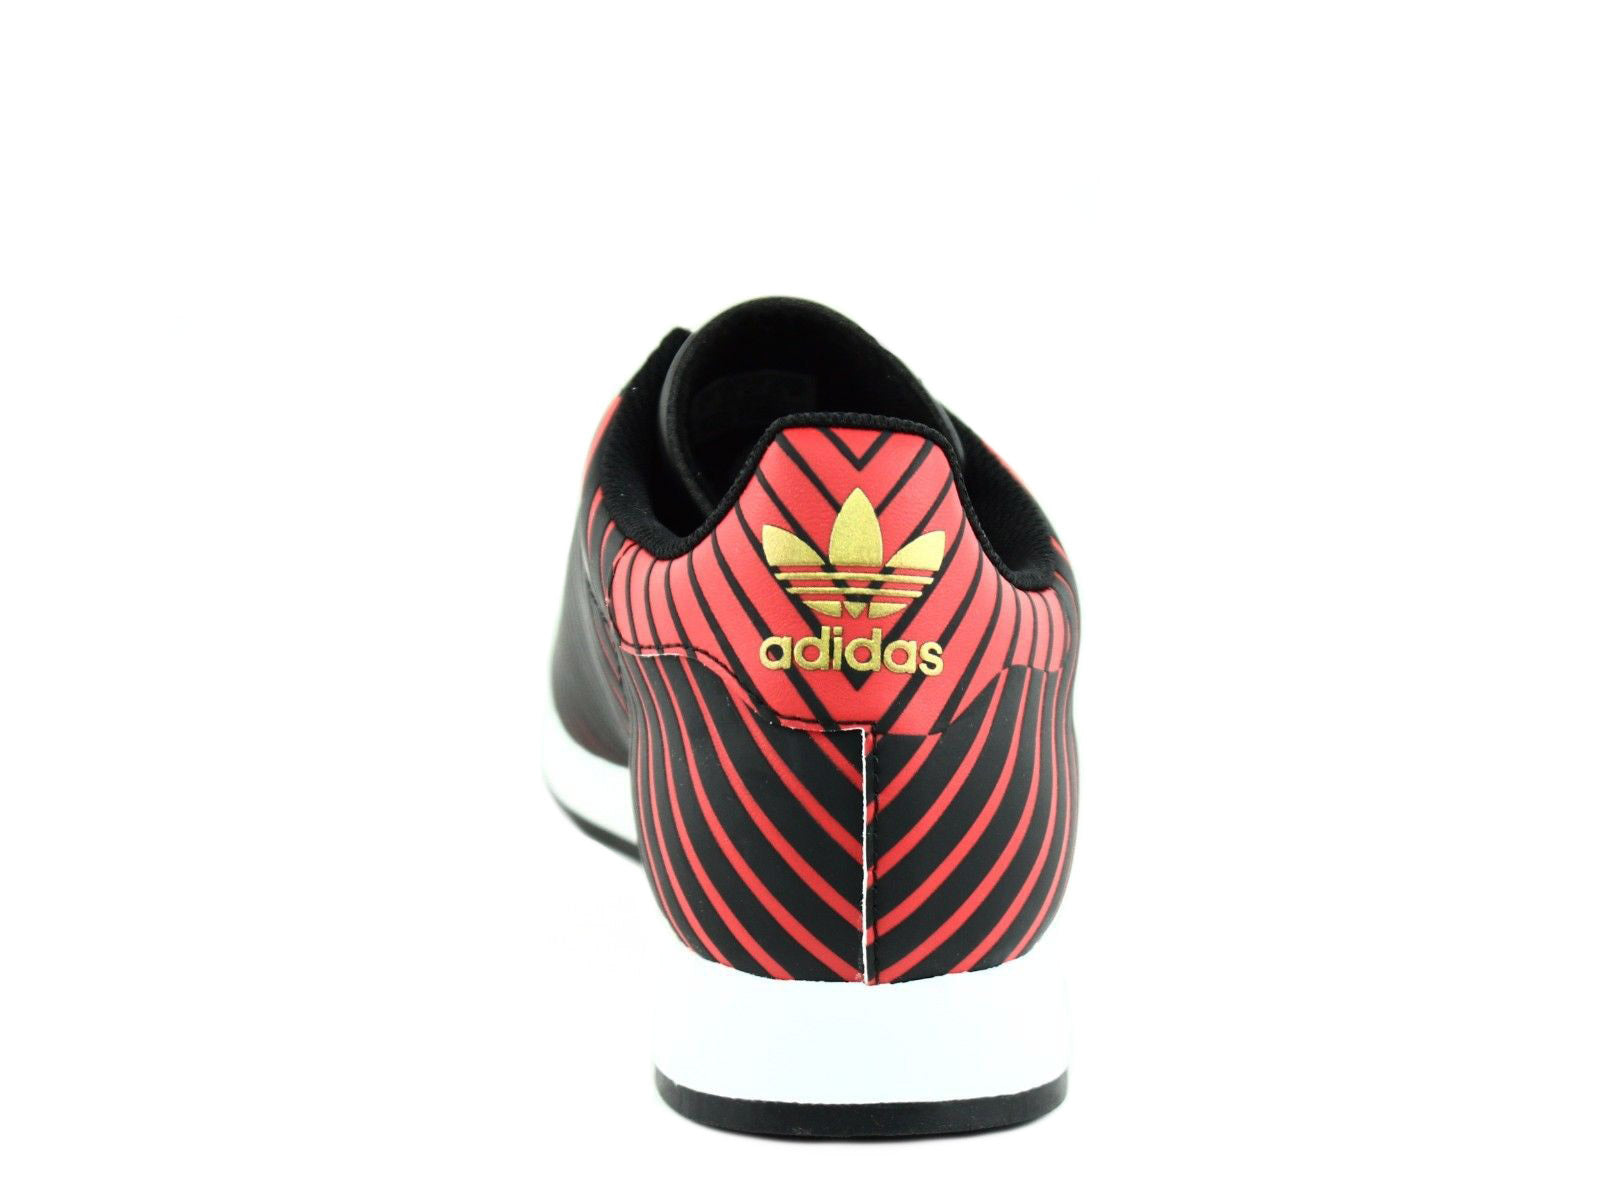 adidas samoa shoes men's black